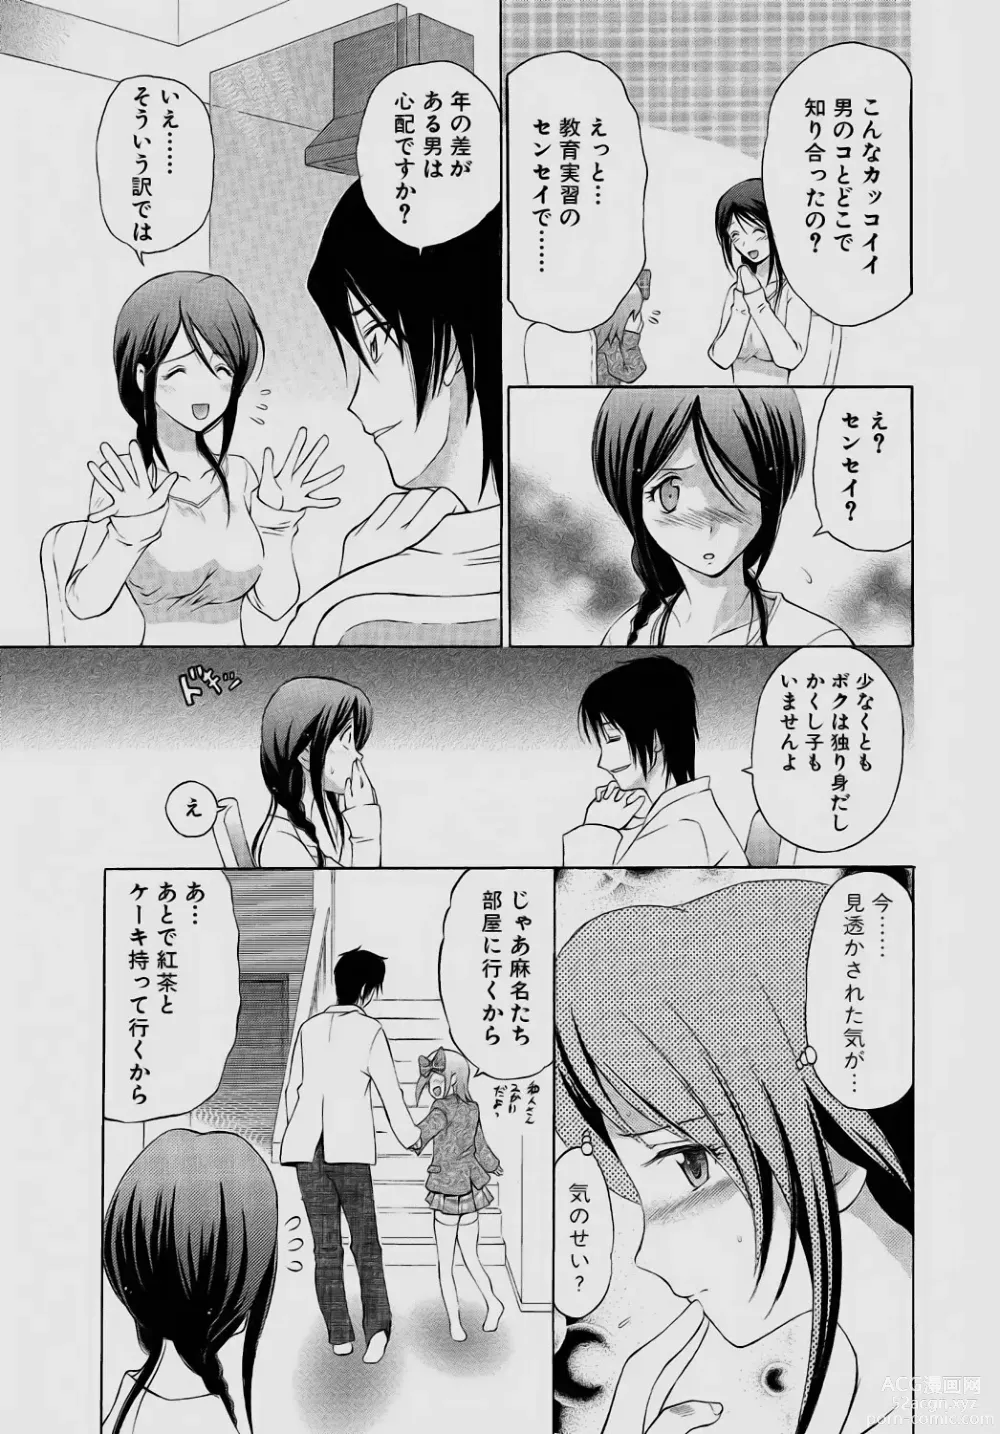 Page 7 of manga Sareruga MaMa